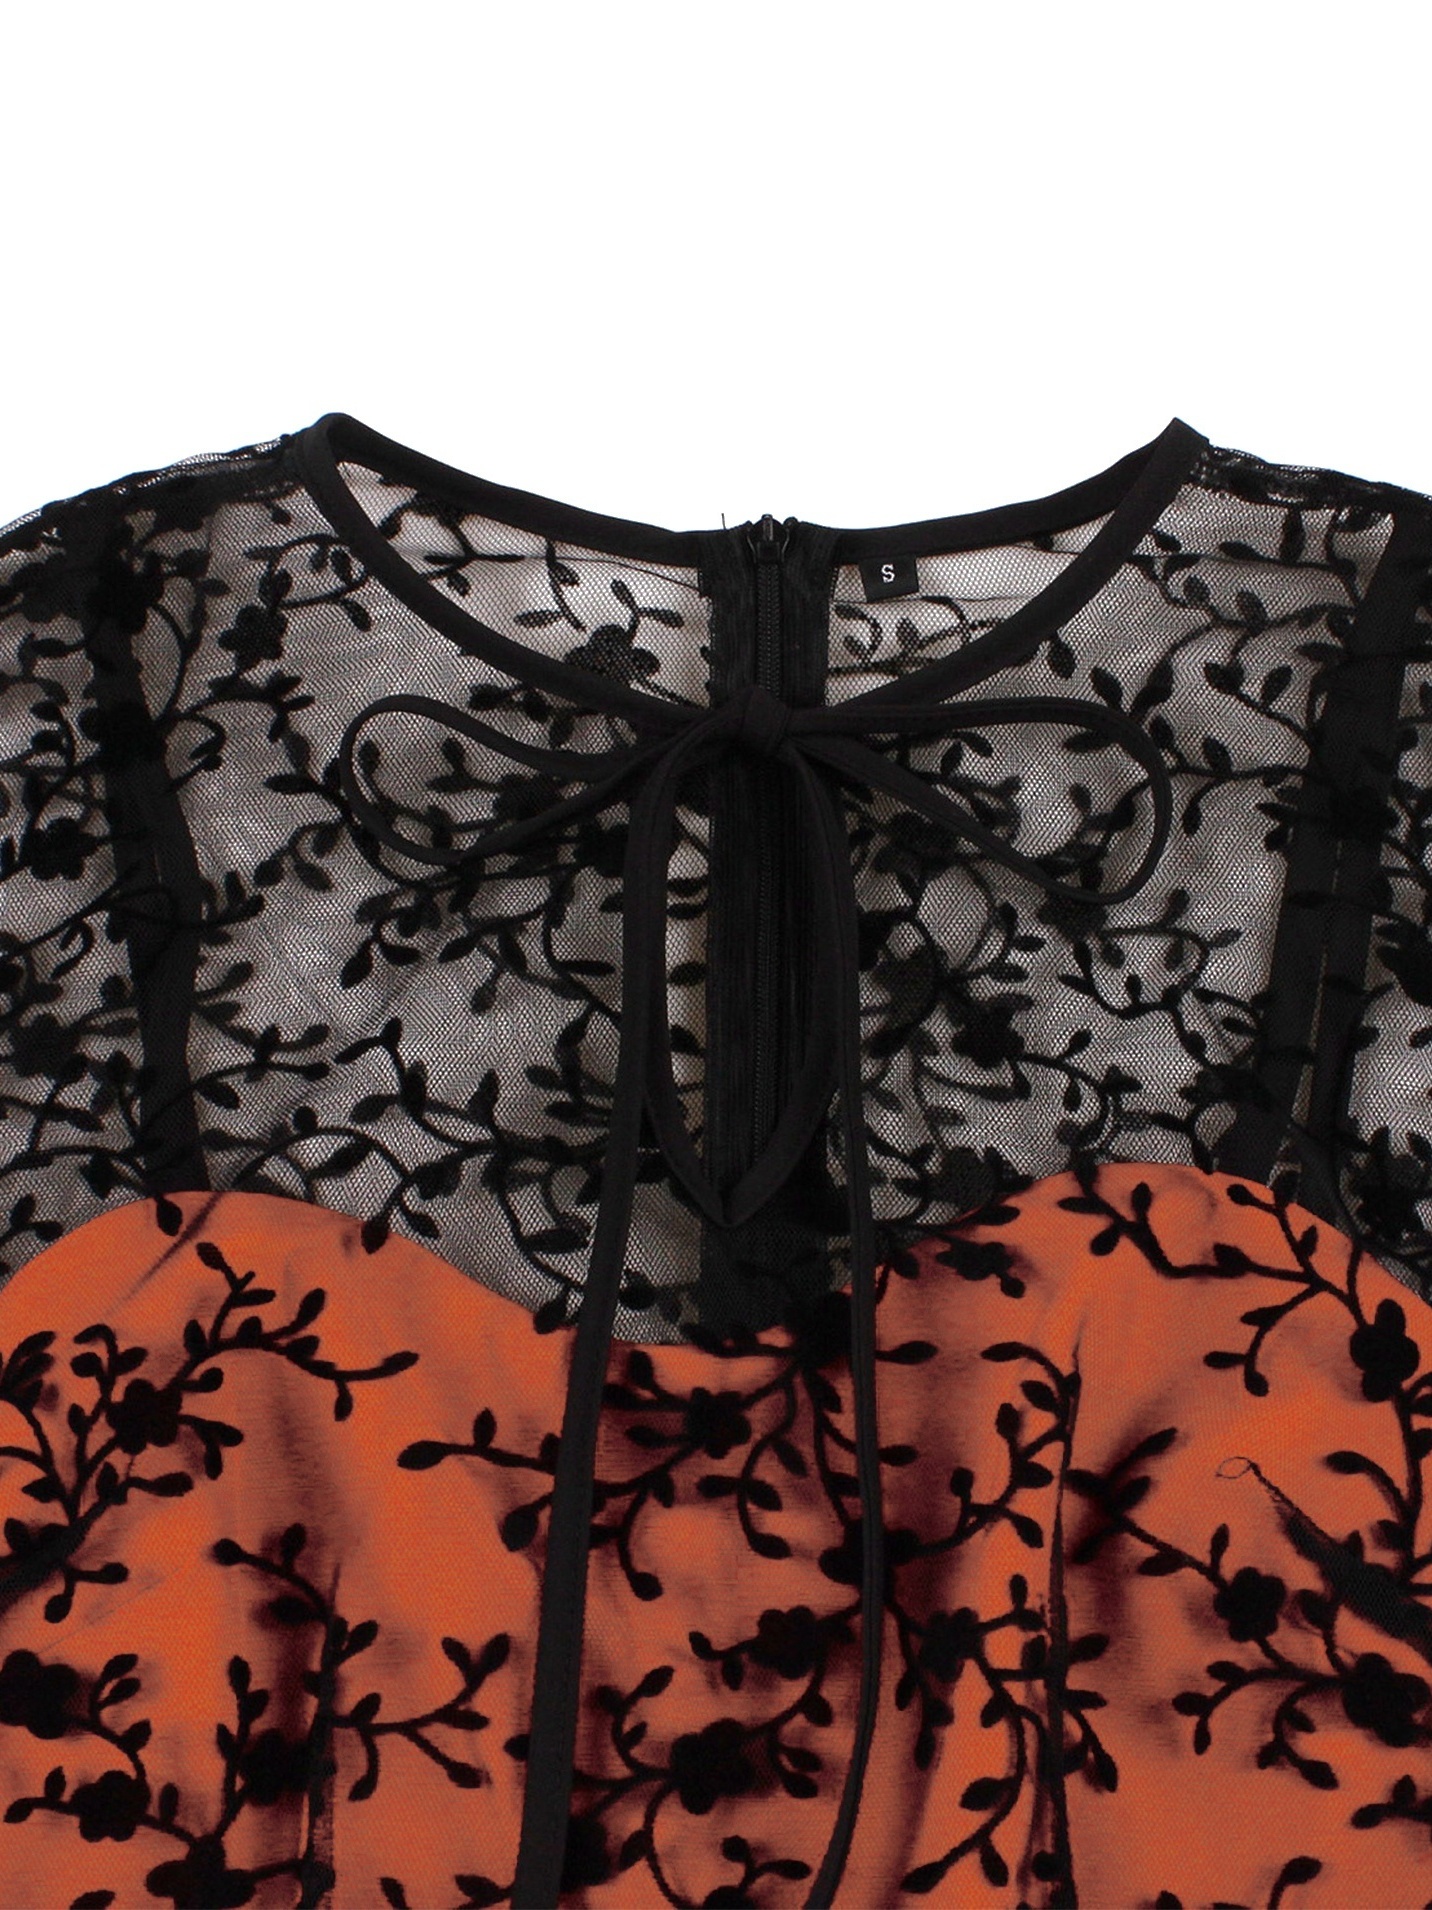 gothic contrast mesh sleeveless dress elegant bow tie pleated dress womens clothing